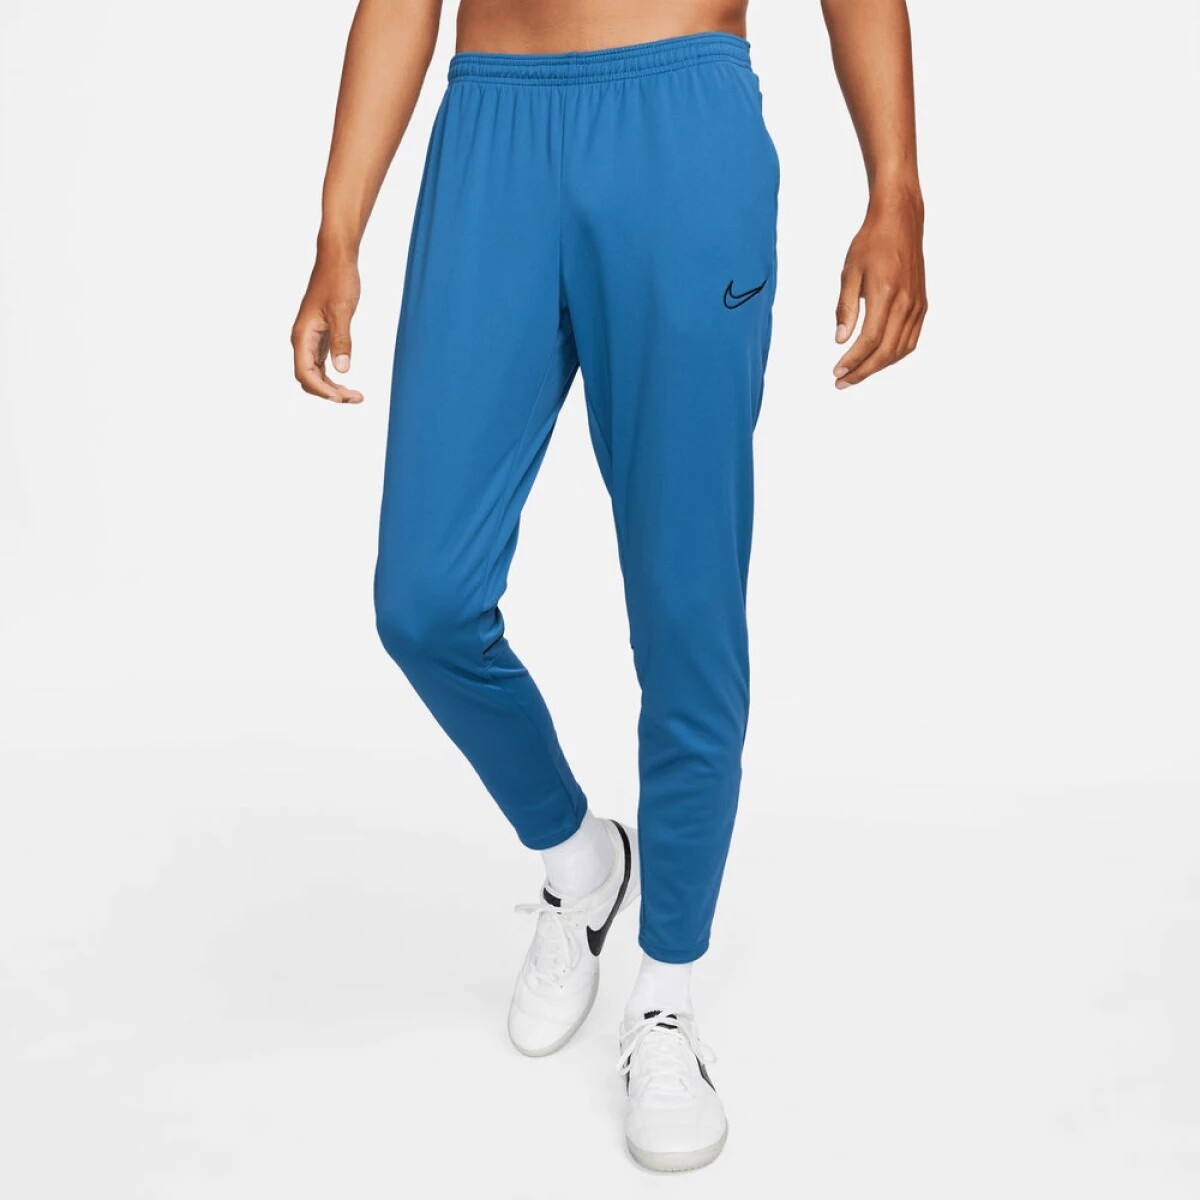 Pantalon Nike Futbol Hombre Acd21 Kpz Dk Marina - Color Único 